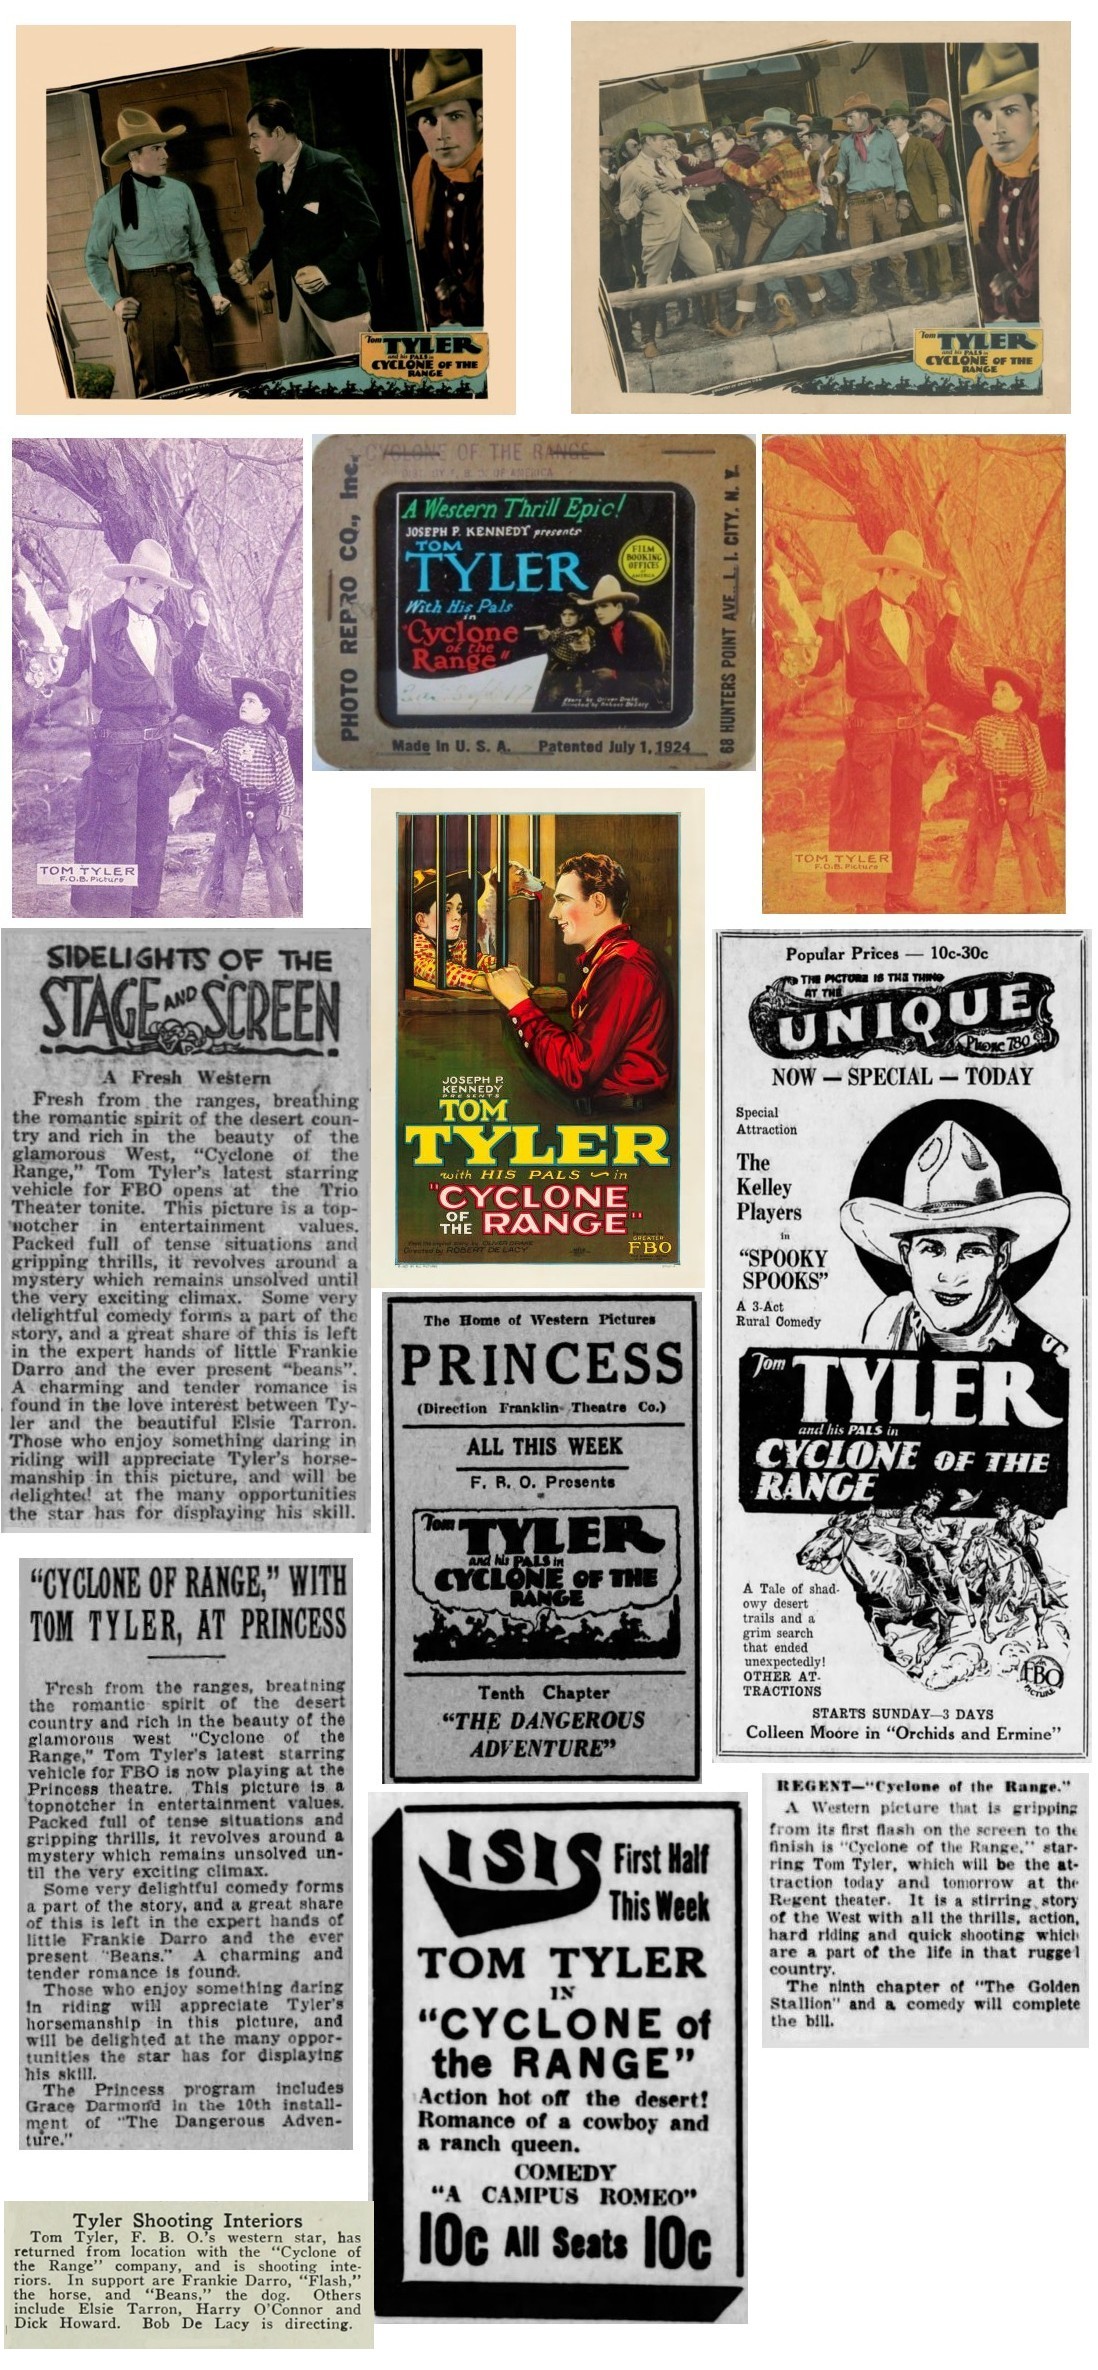 Cyclone of the Range arcade cards one sheet lantern slide film reviews cinema ads